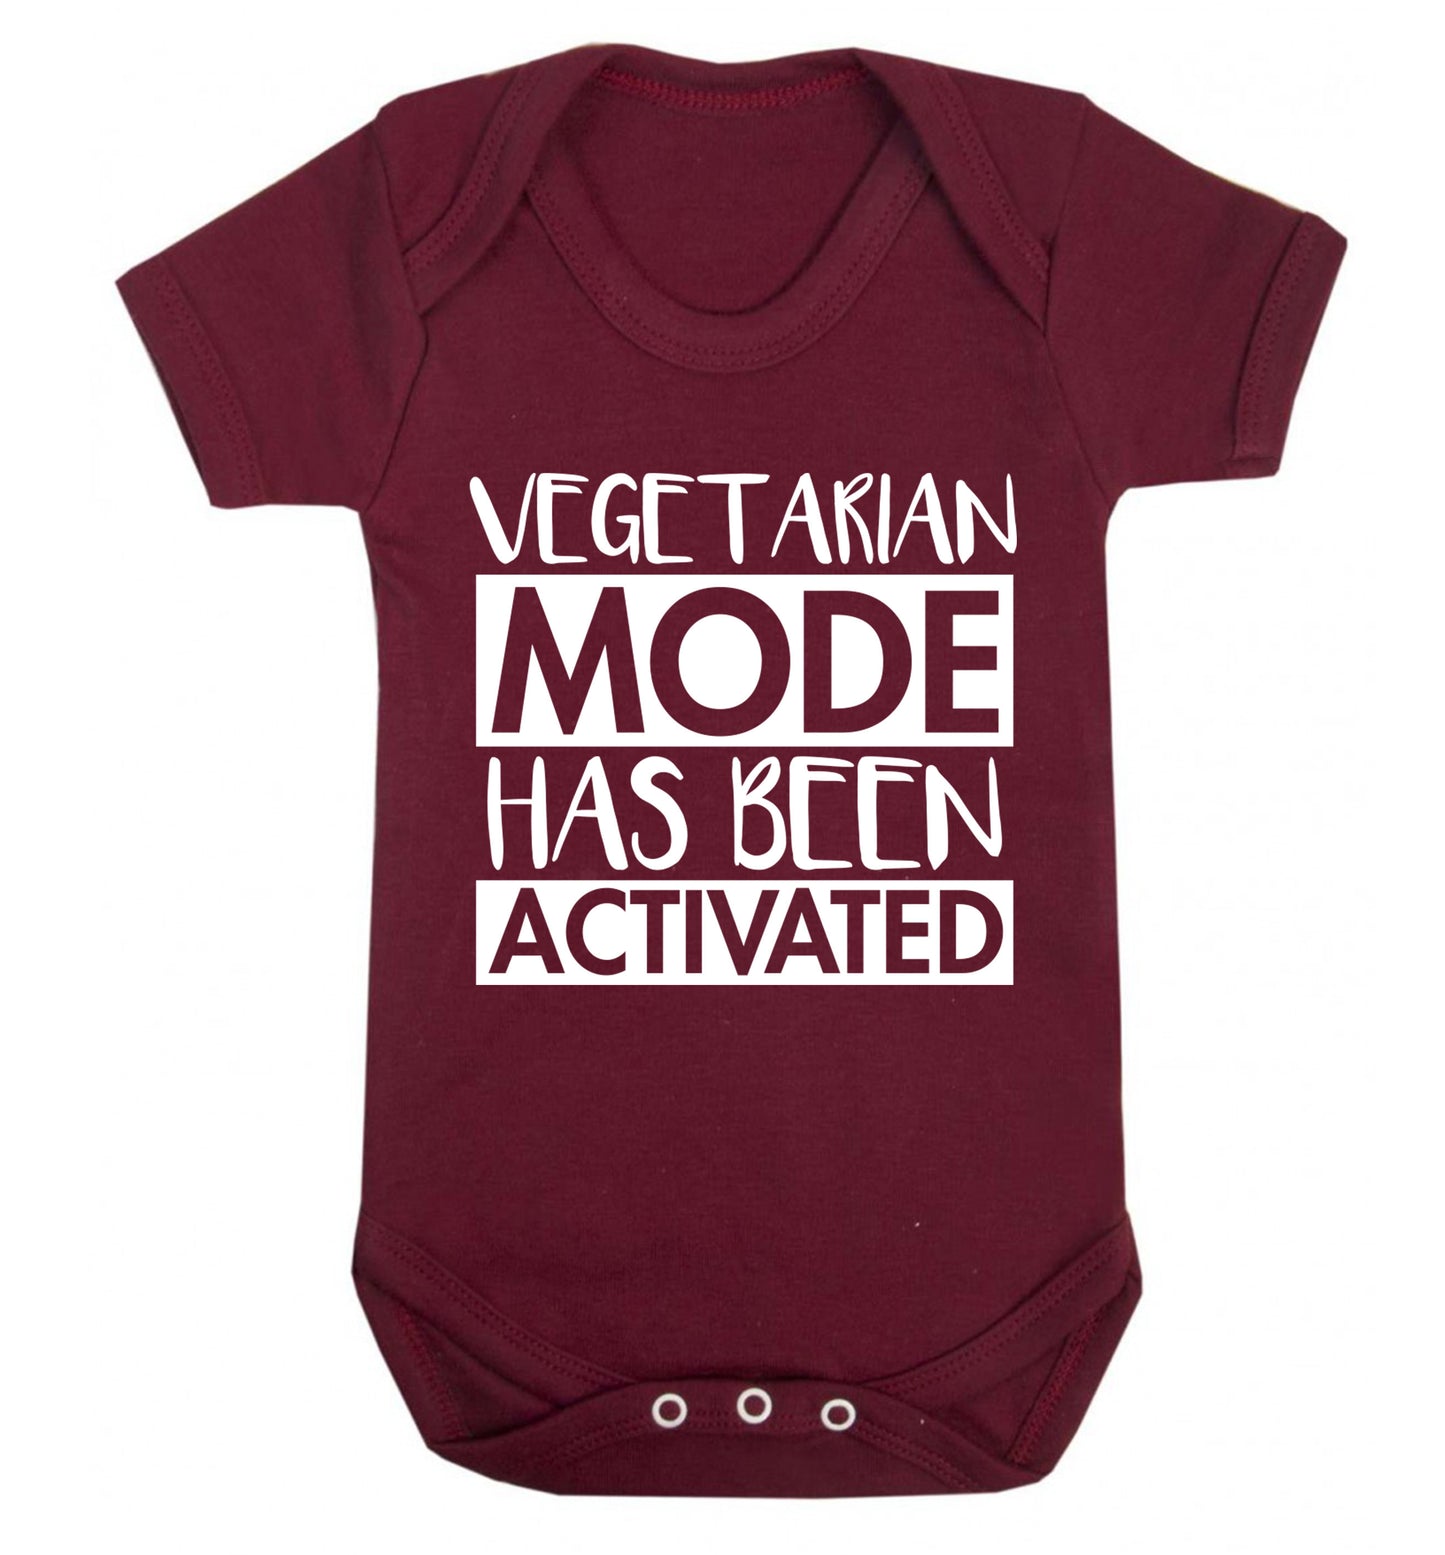 Vegetarian mode activated Baby Vest maroon 18-24 months